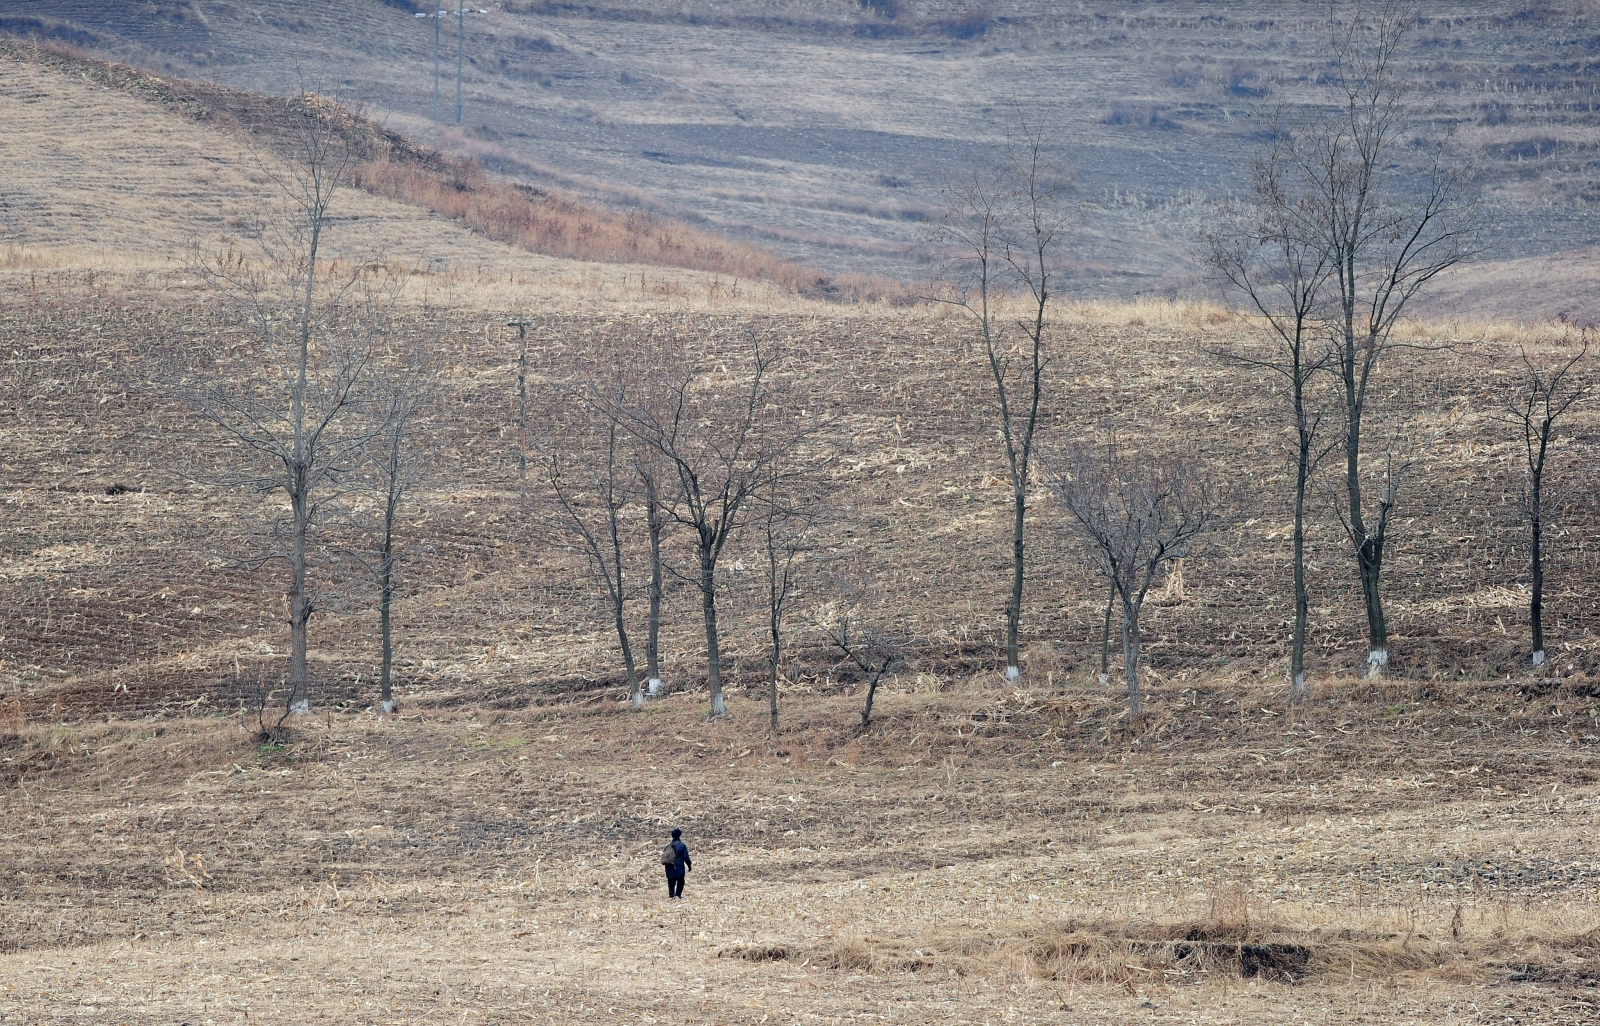 A North Korean woman walks